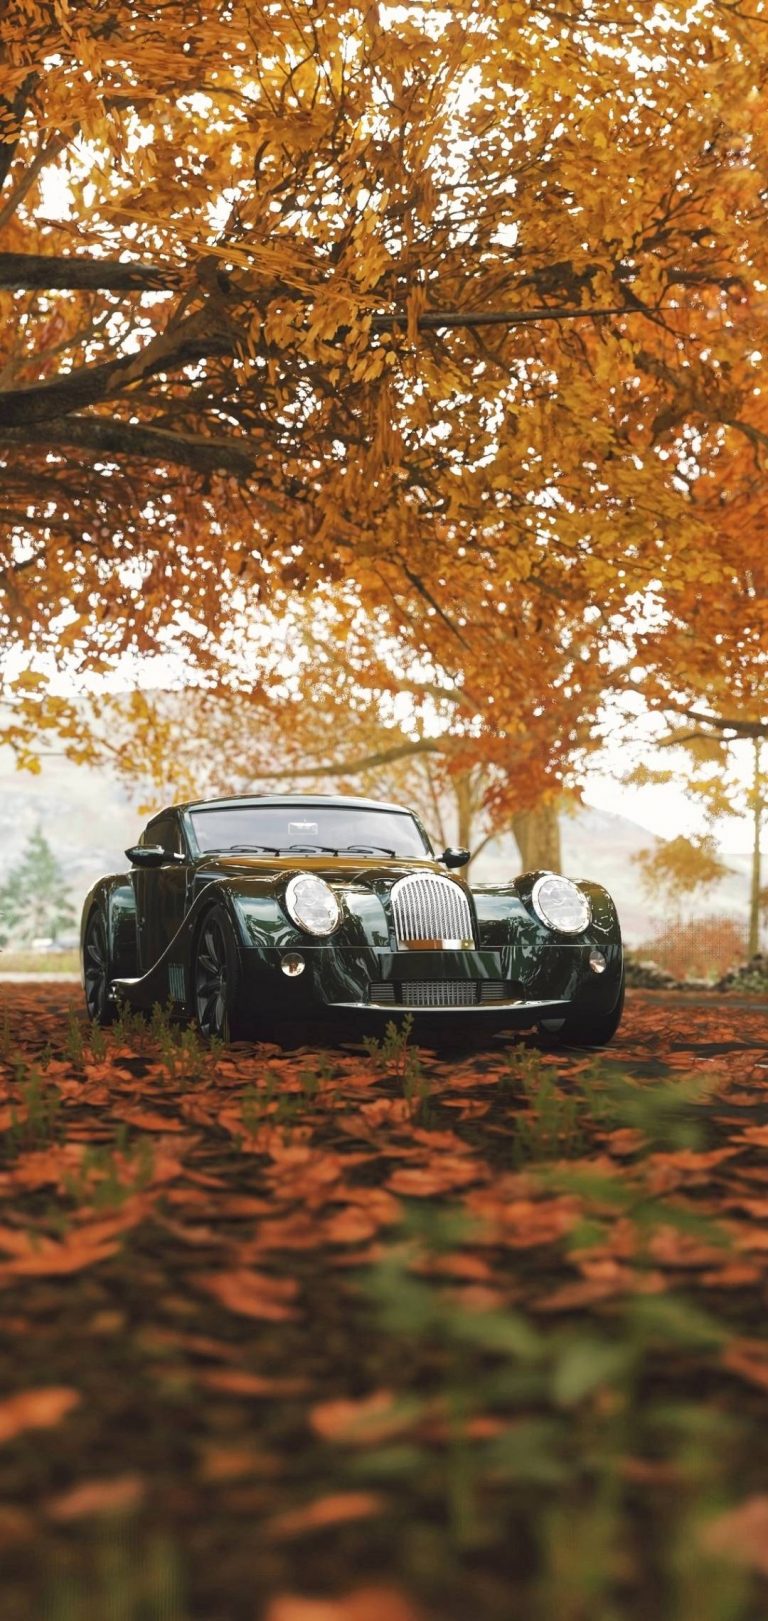 Autumn And Car Wallpaper